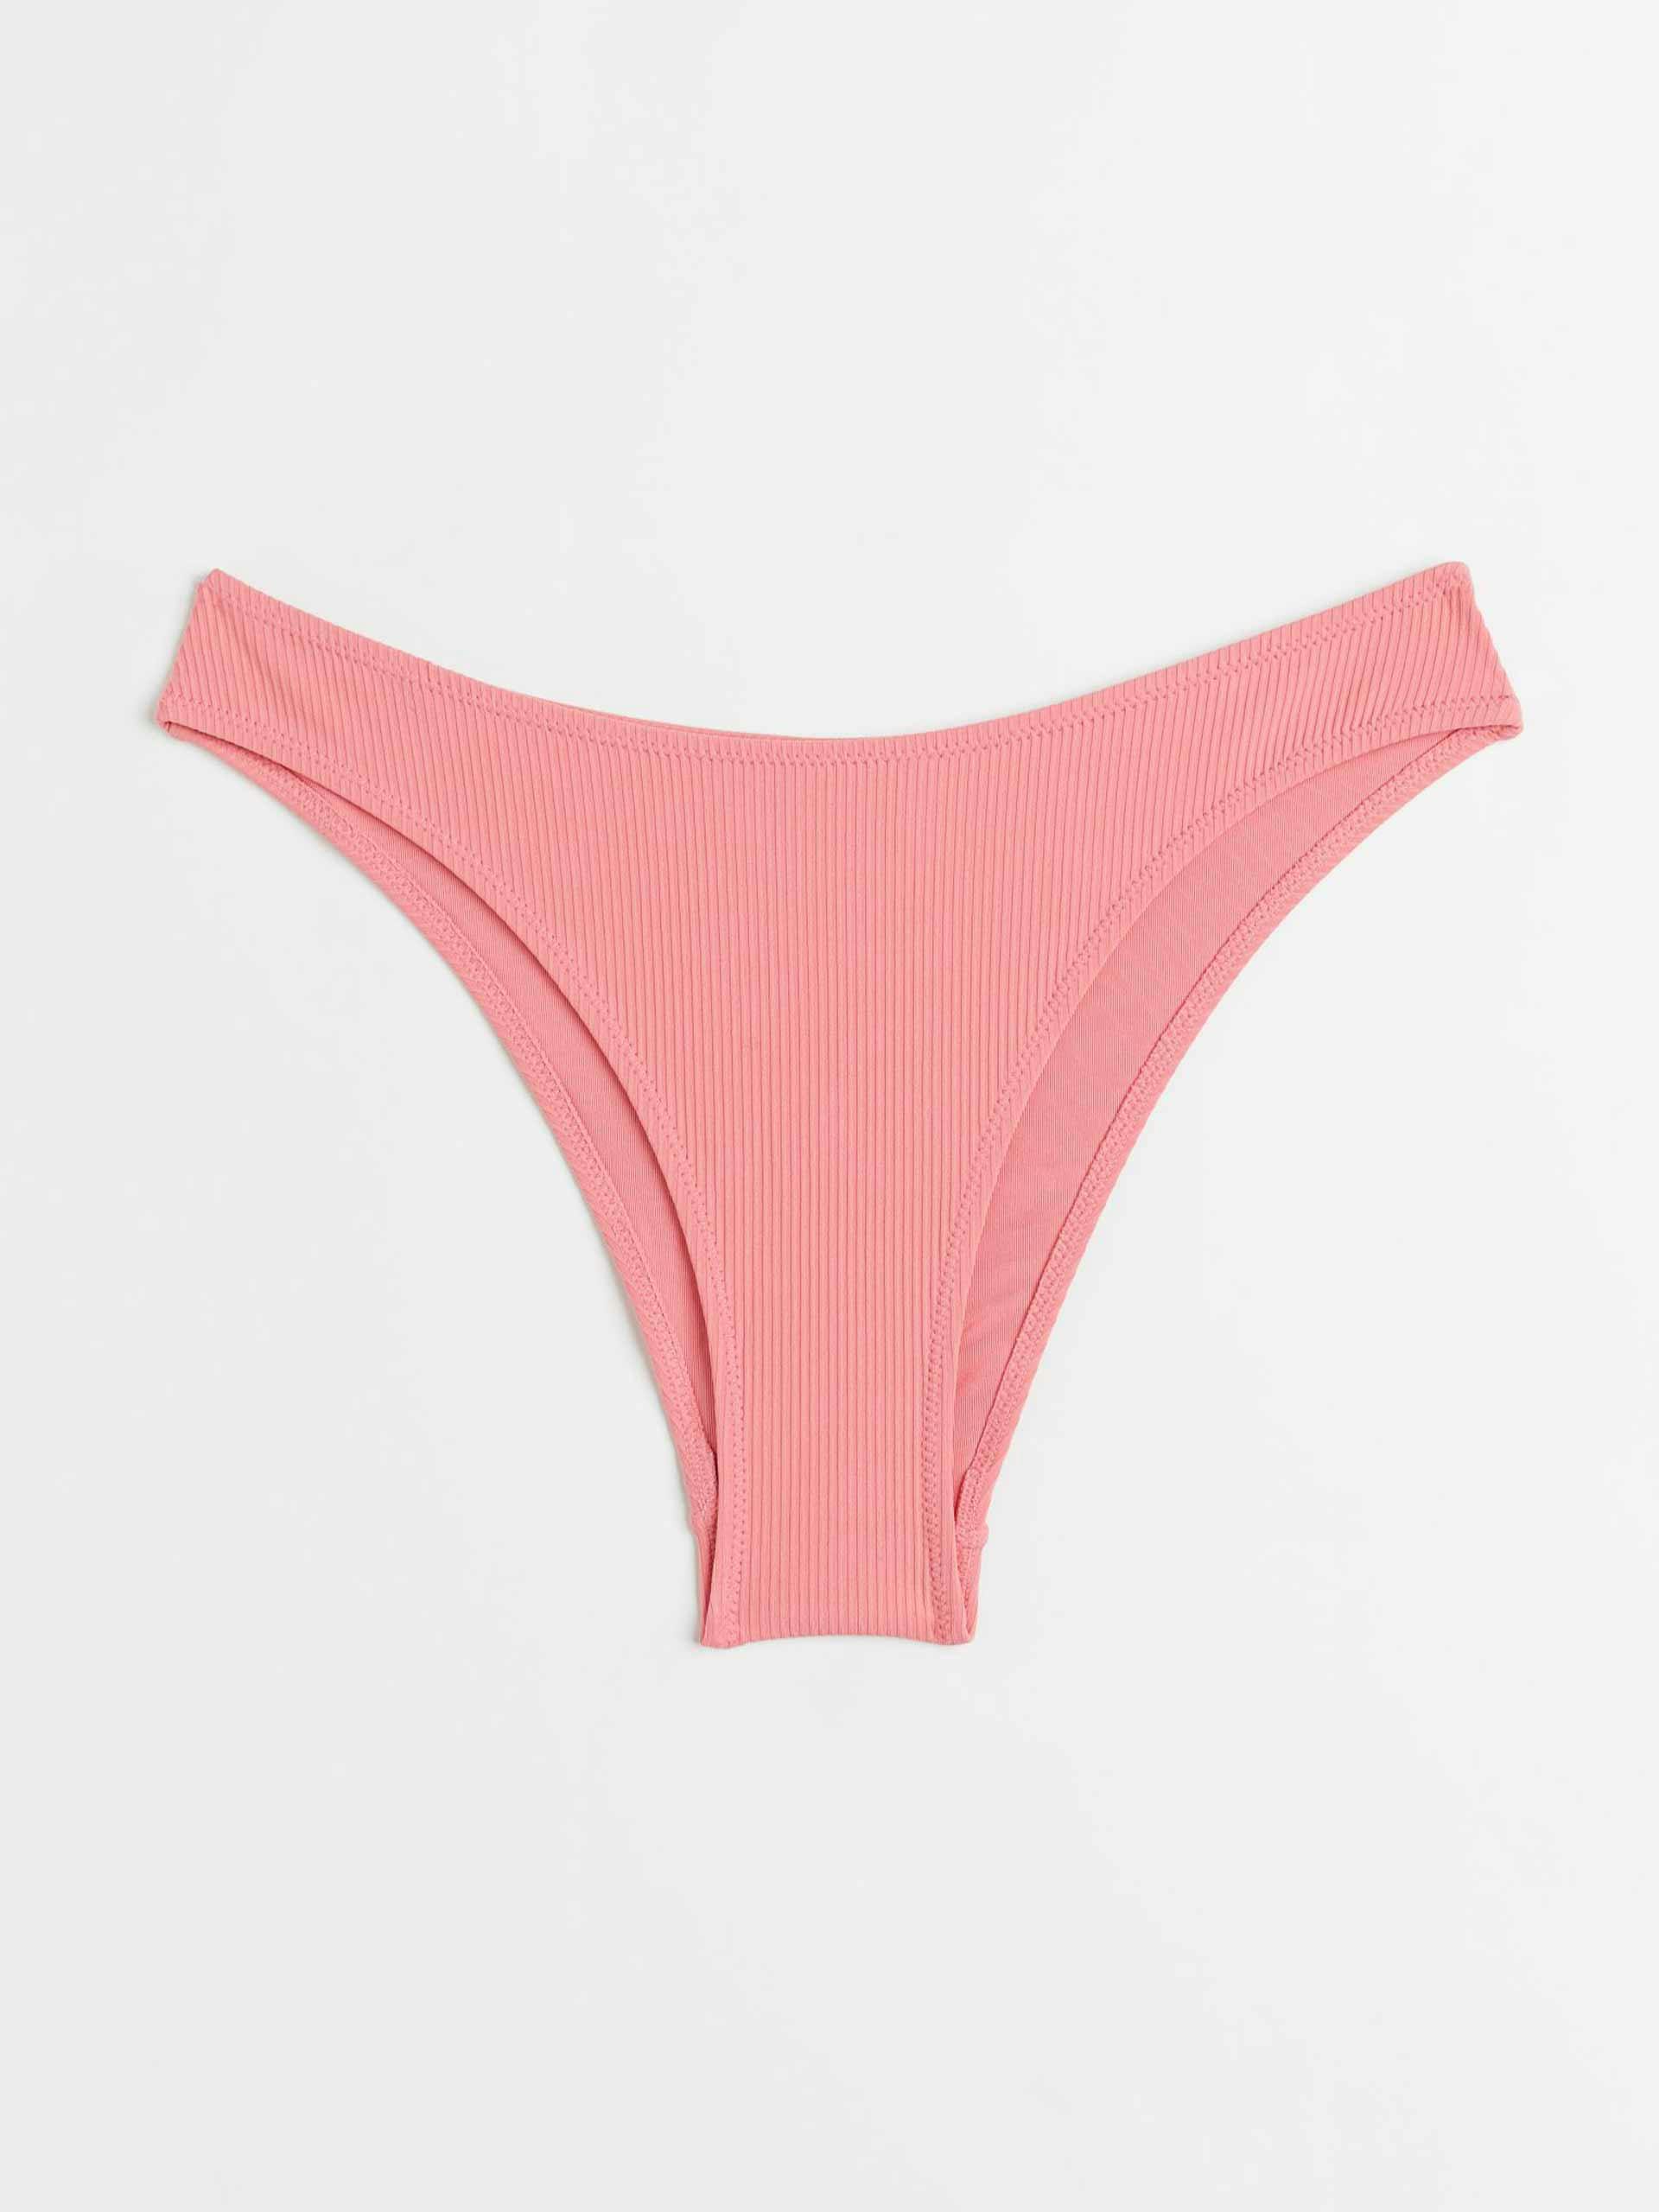 Pink bikini bottoms